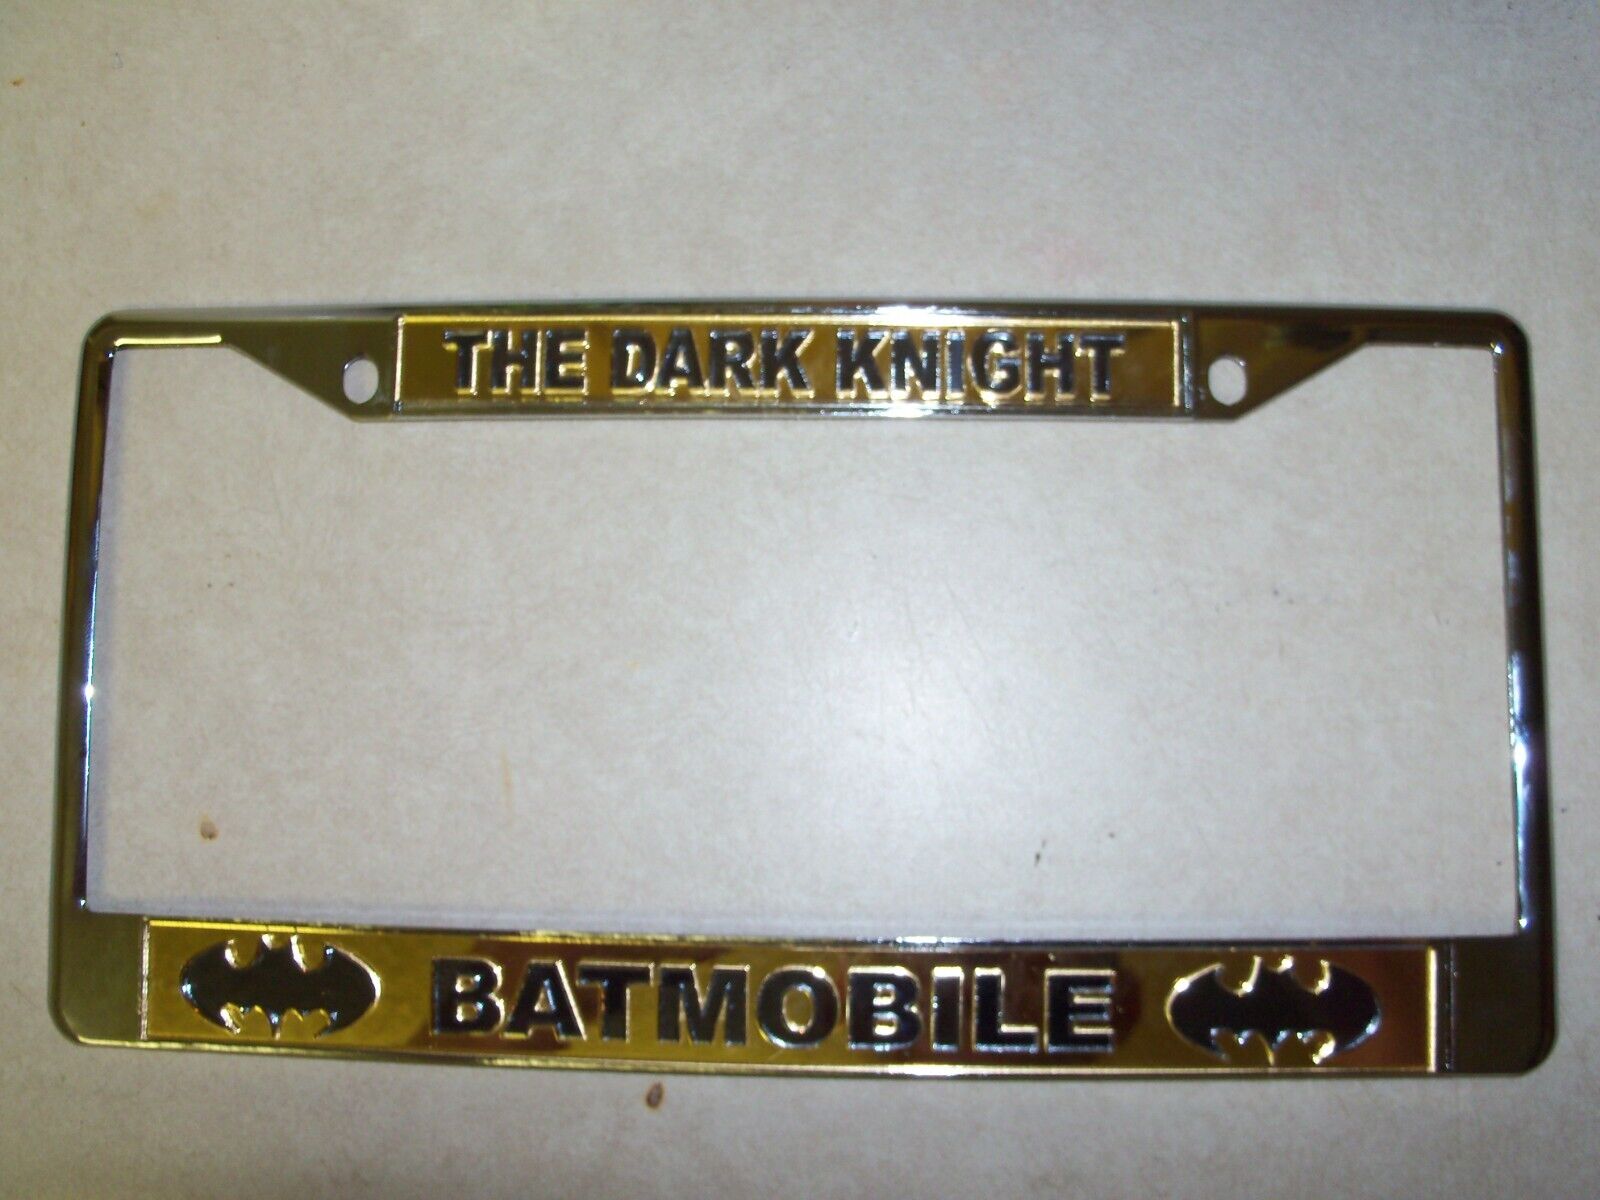 Batman, Bat Mobile, The dark Knight, Inspired Acrylic Mirror License Plate Frame